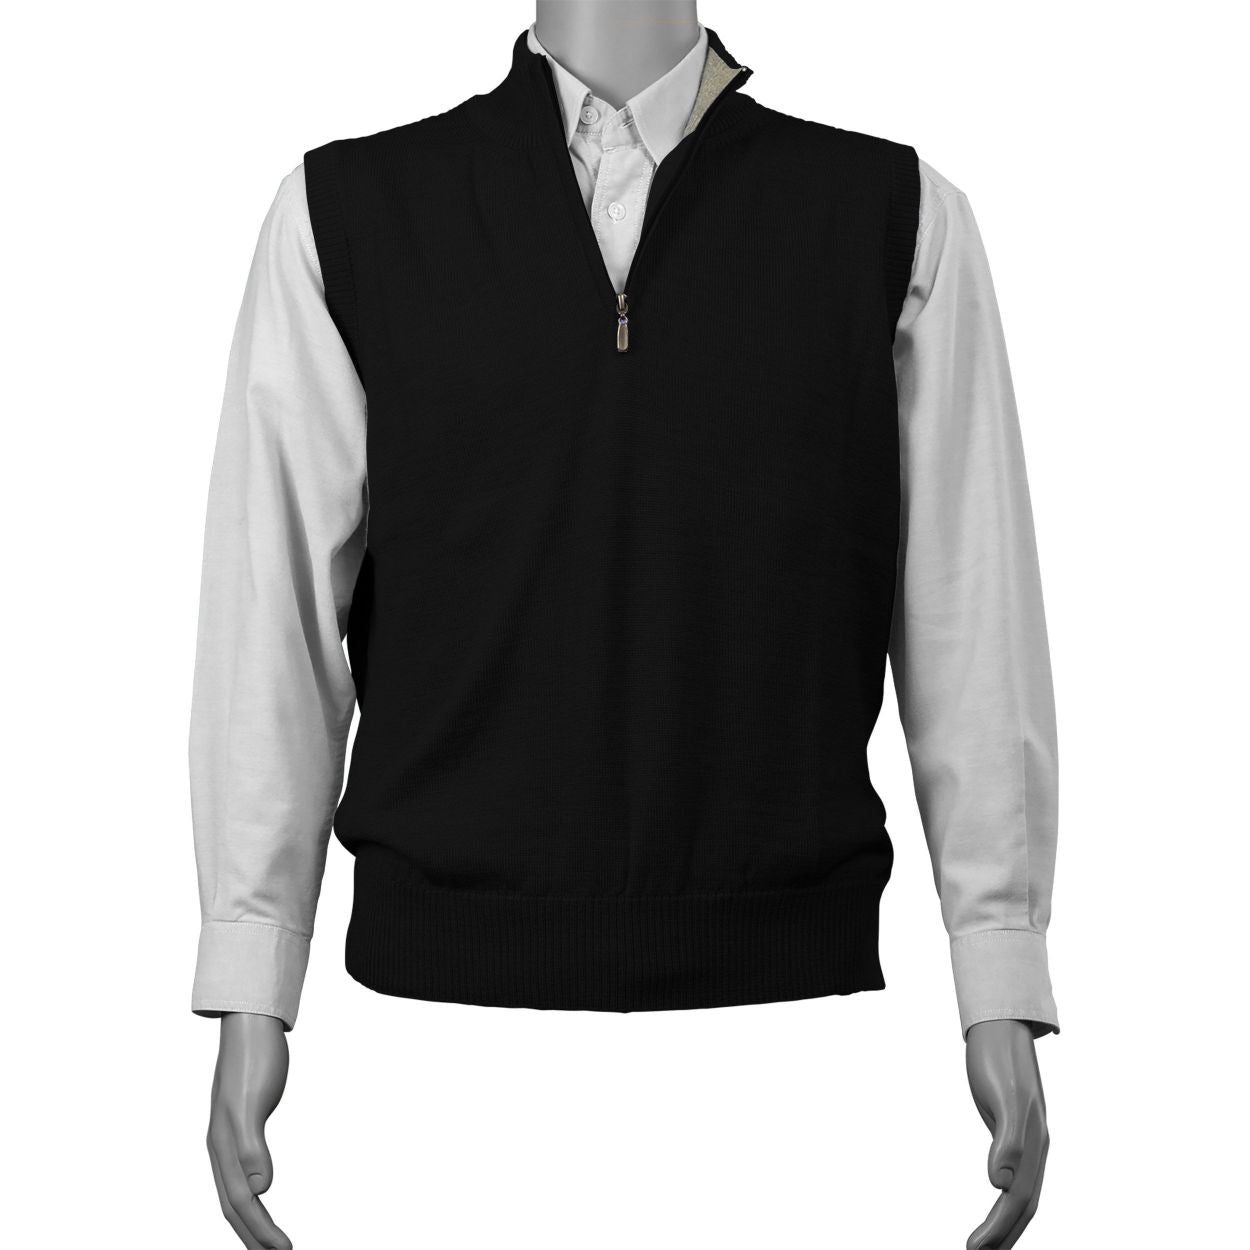 Royal Alpaca Half-Zip Mock Neck Sweater Vest in Black by Peru Unlimited